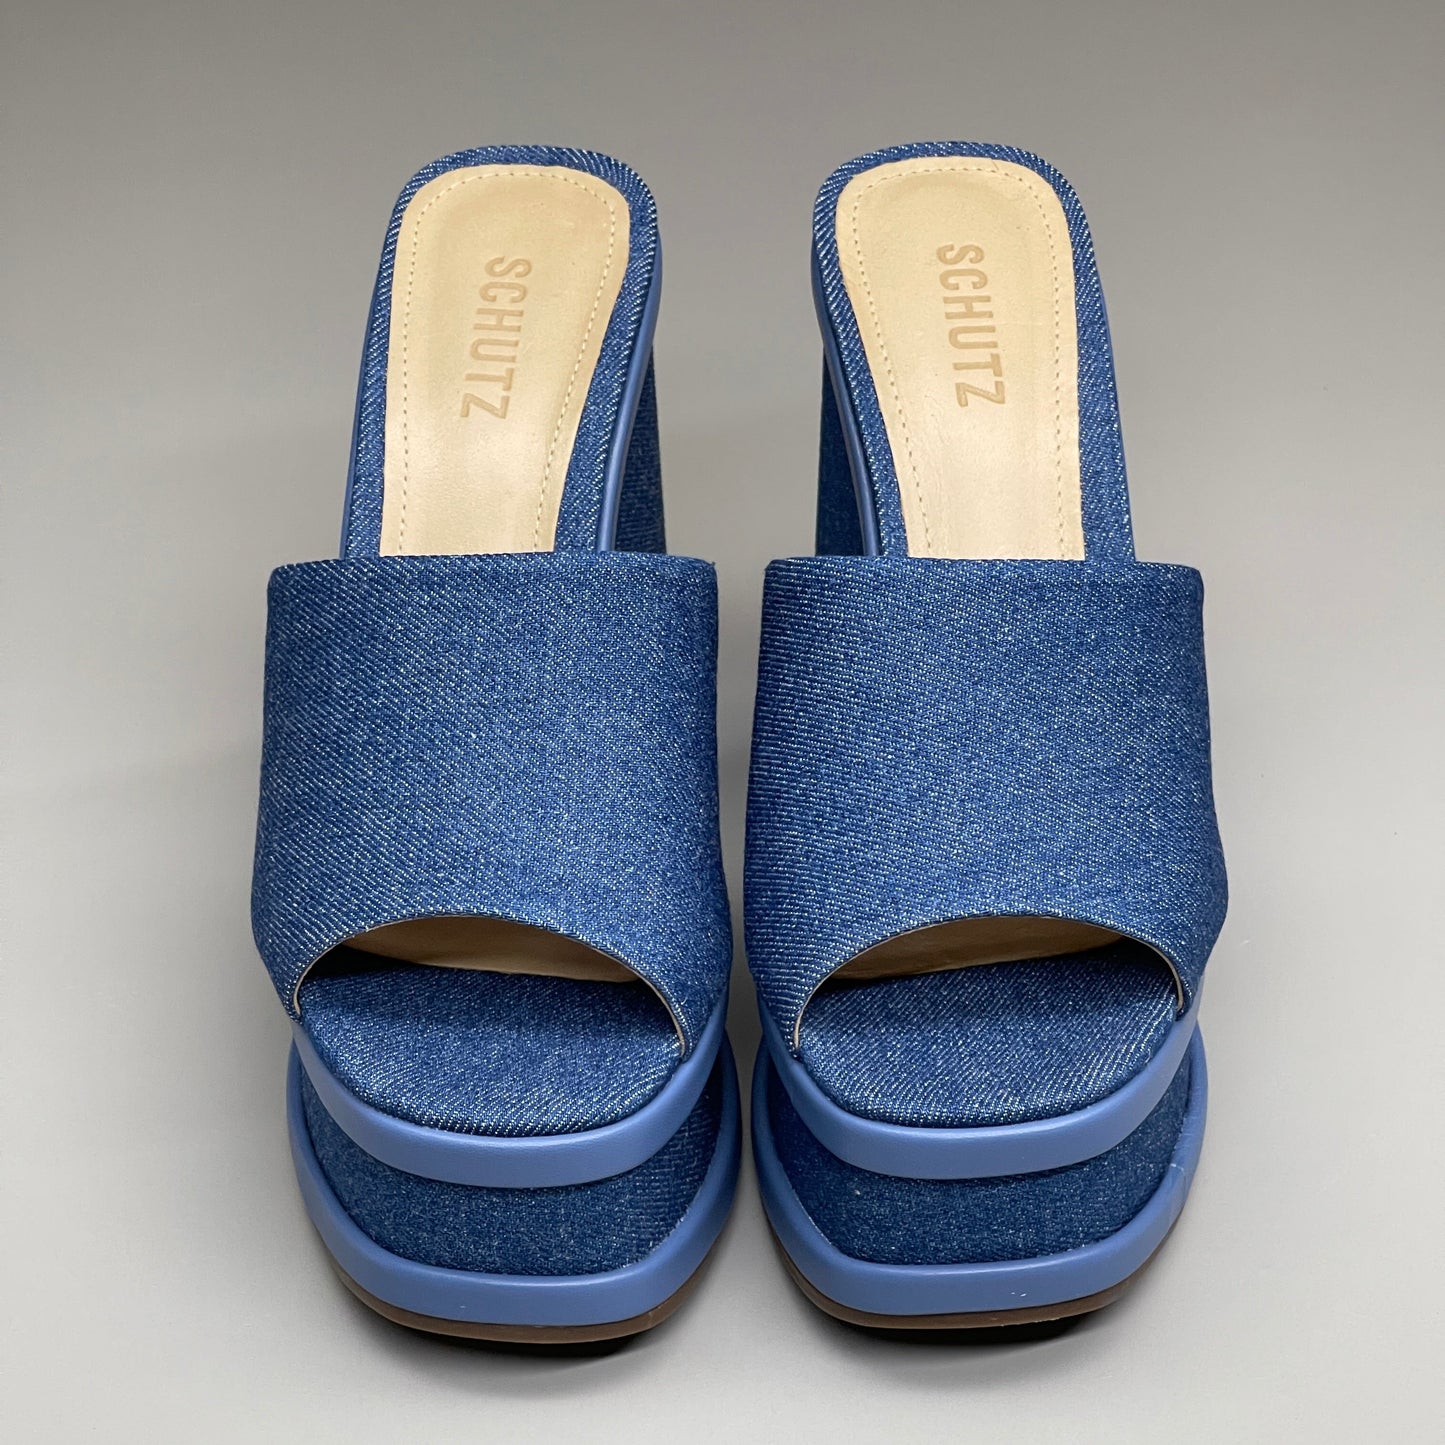 SCHUTZ Dalle Denim Women's Wedge Sandal Blue Platform Shoe Sz 9.5B (New)